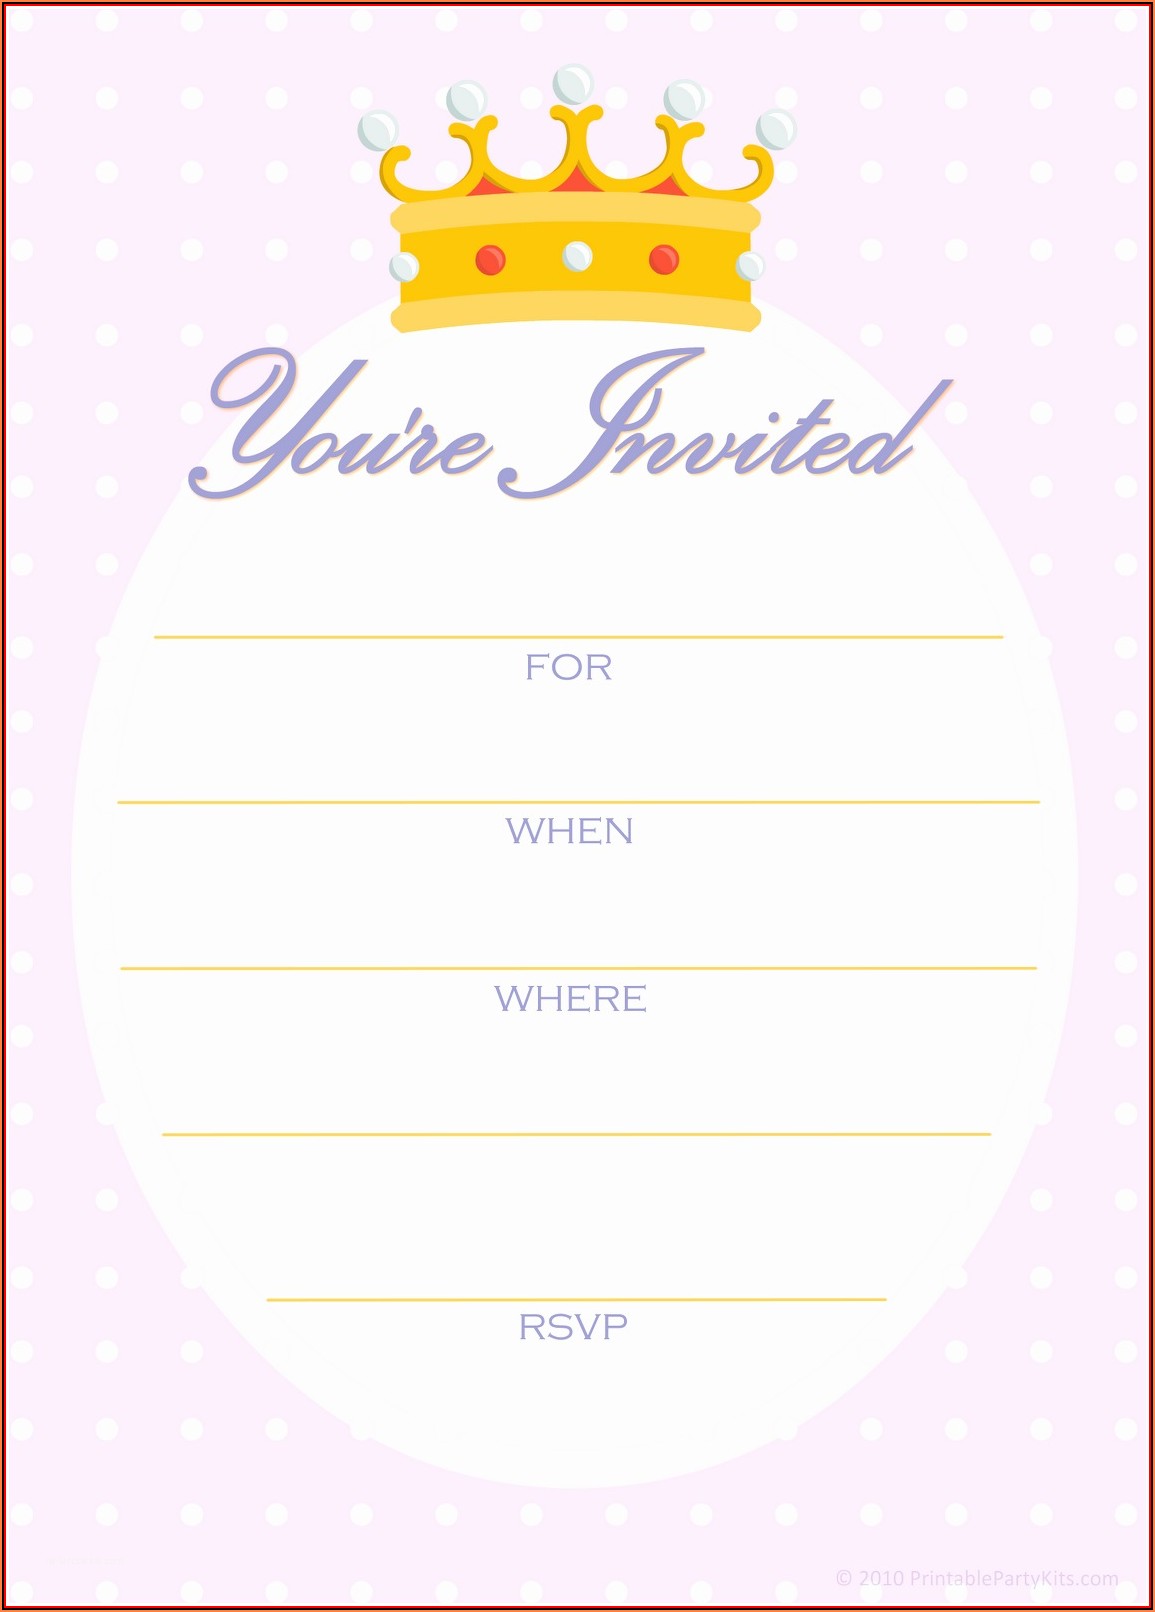 Birthday Party Invitation Template Free